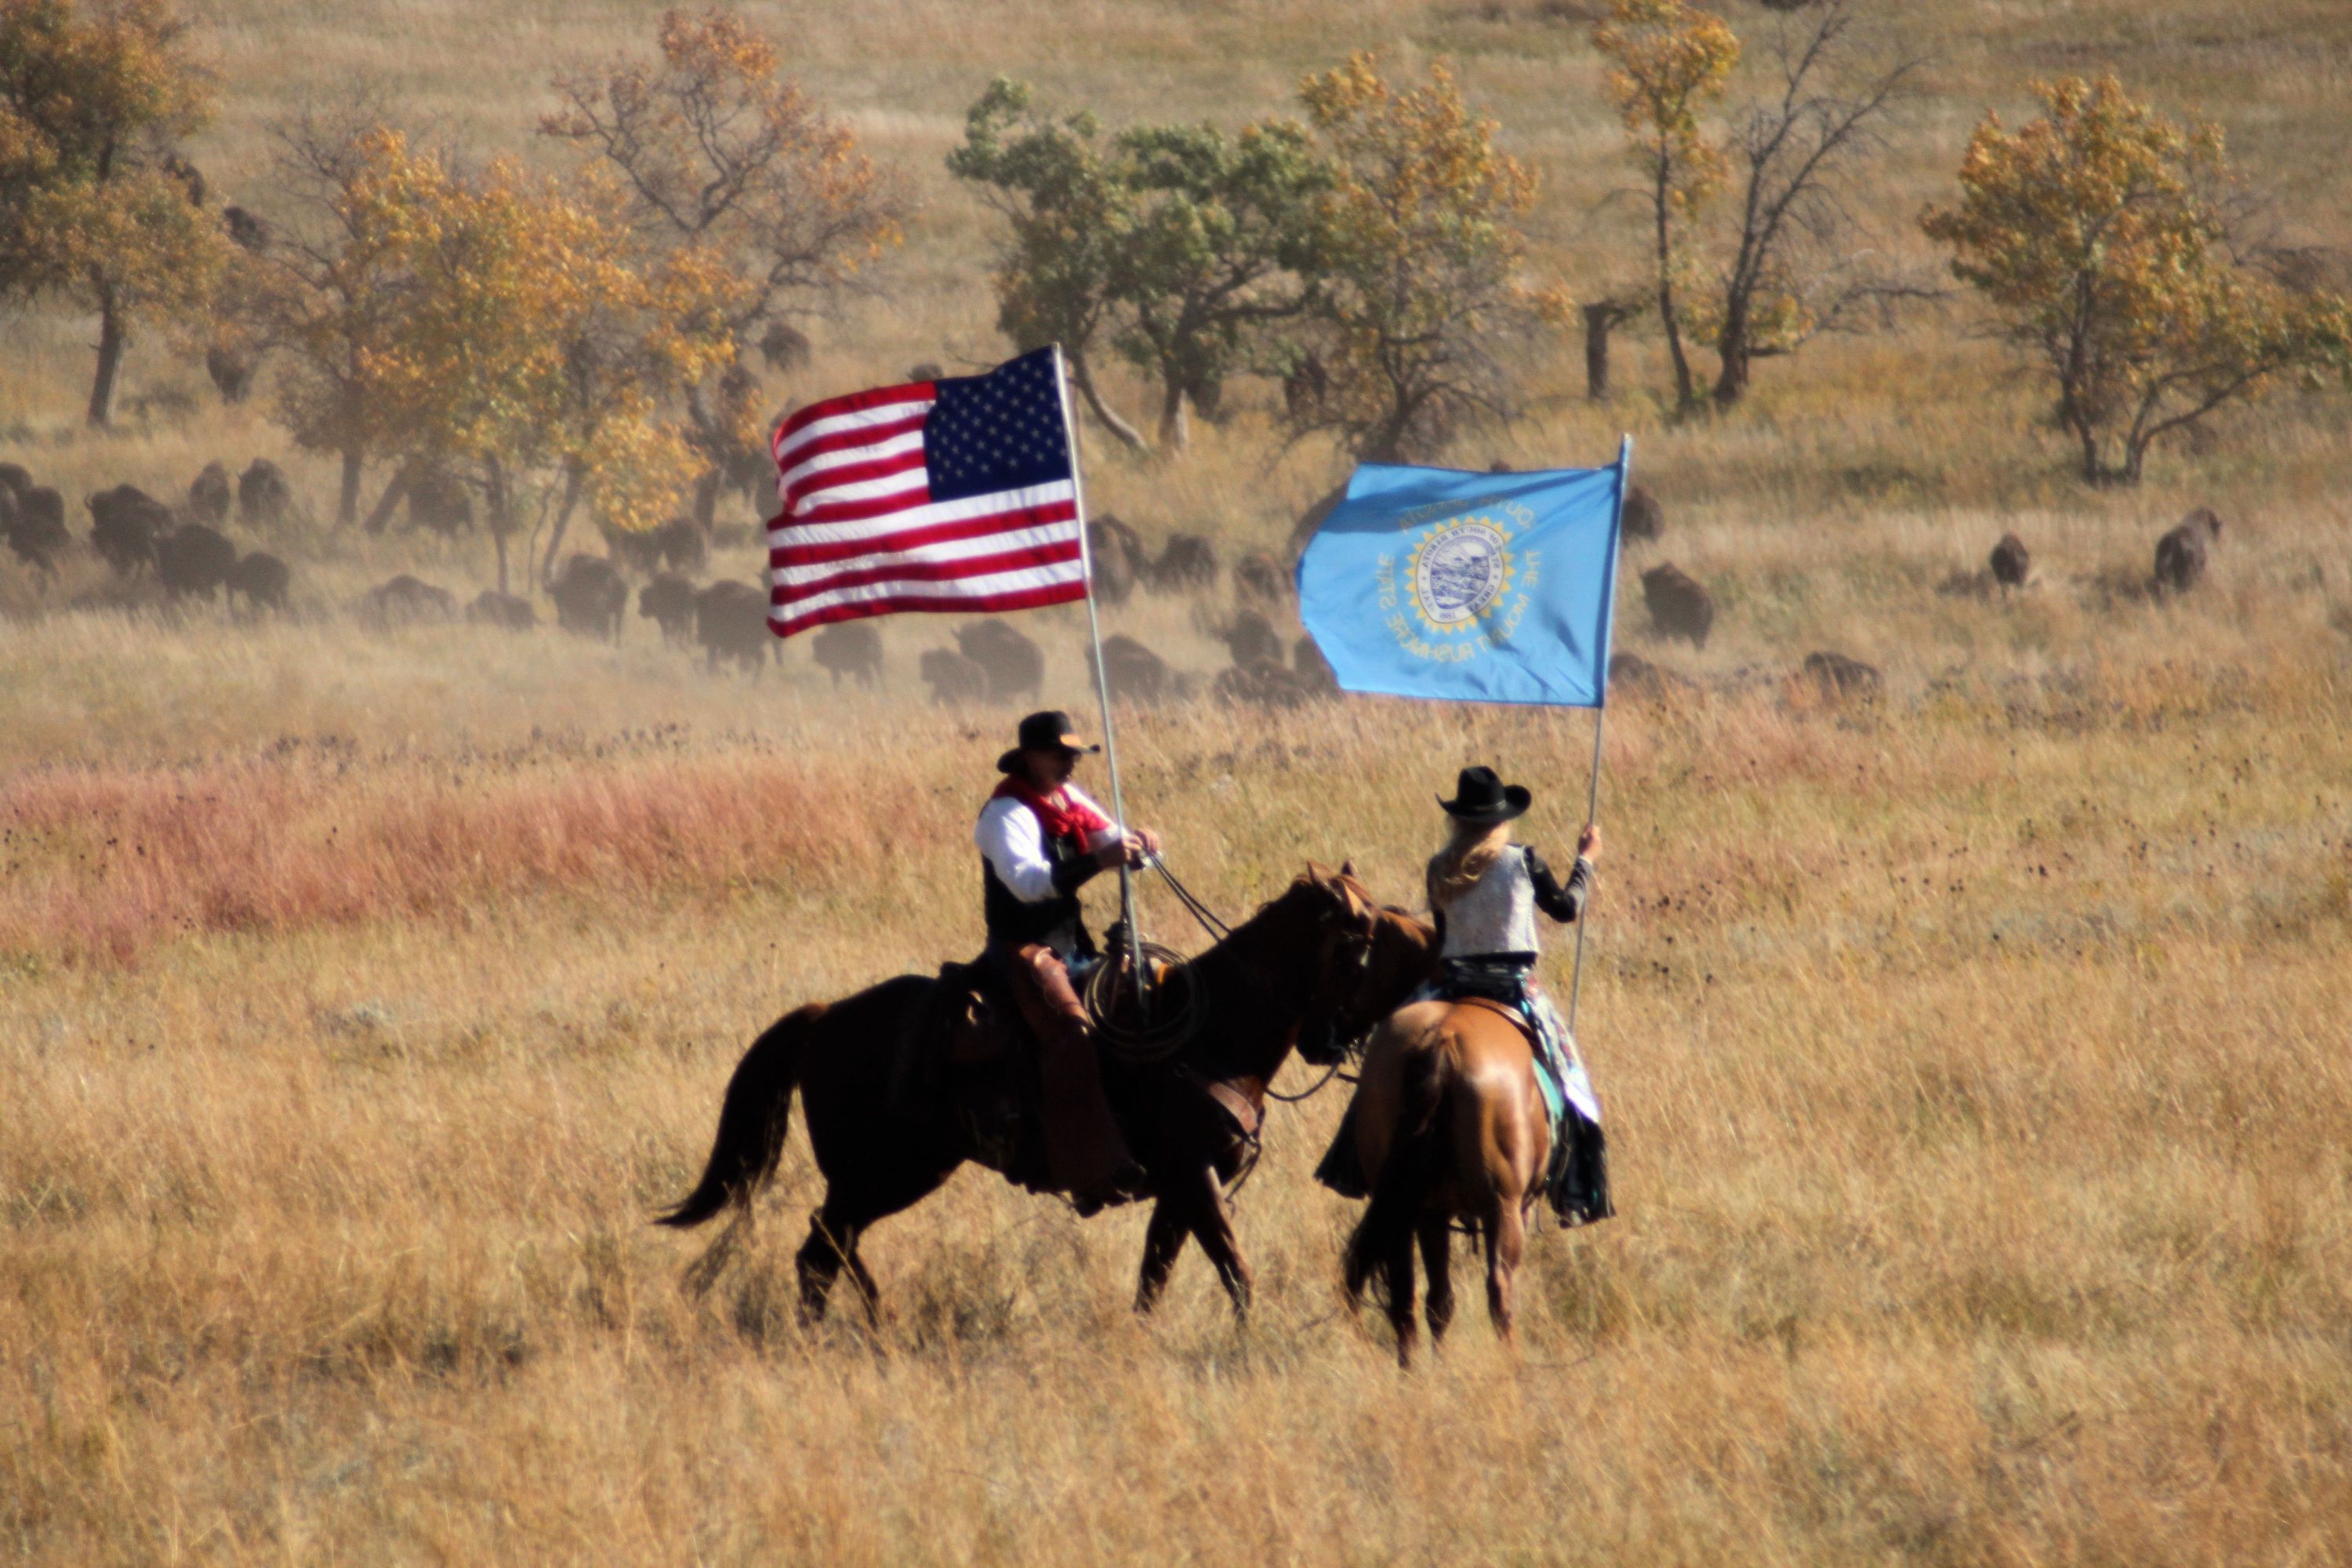 Tim Giago: Invite Lakota warriors to the buffalo roundup in South Dakota